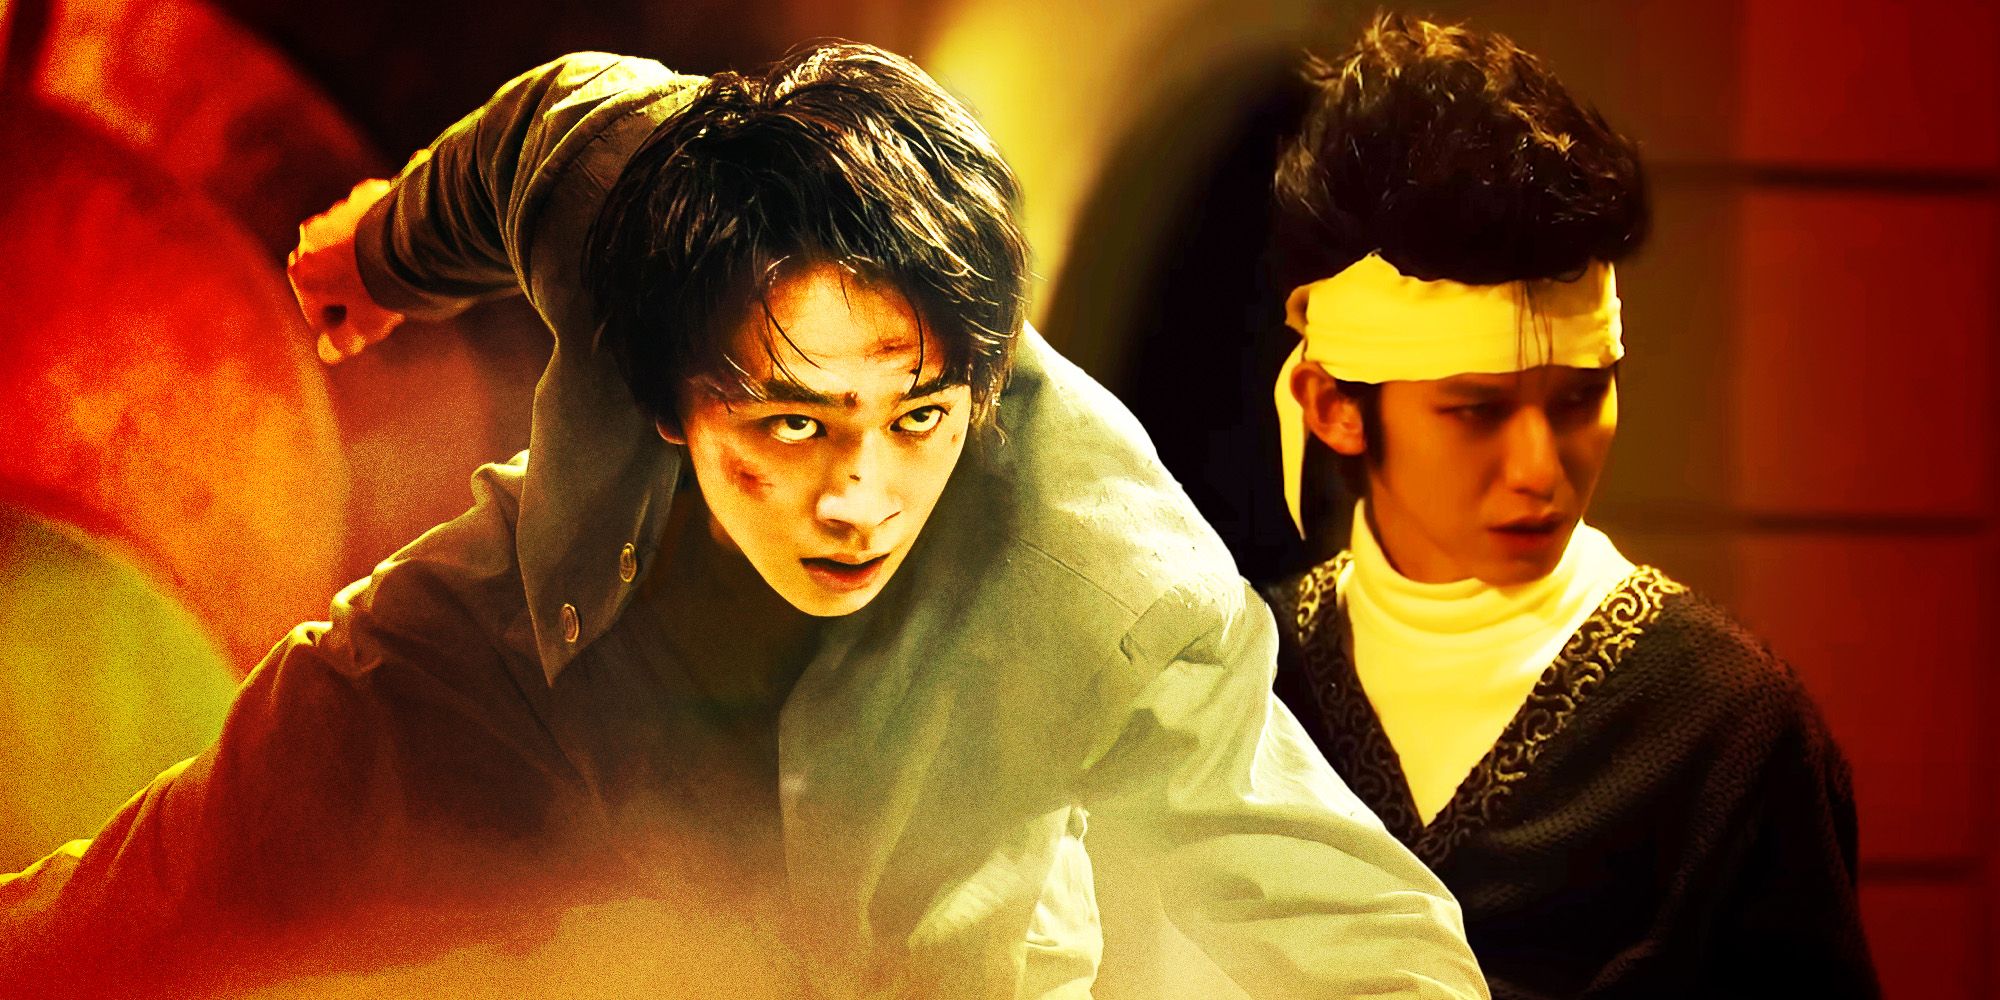 A custom image featuring Yusuke and Hiei in Netflix's Yu Yu Hakusho, both ready to fight